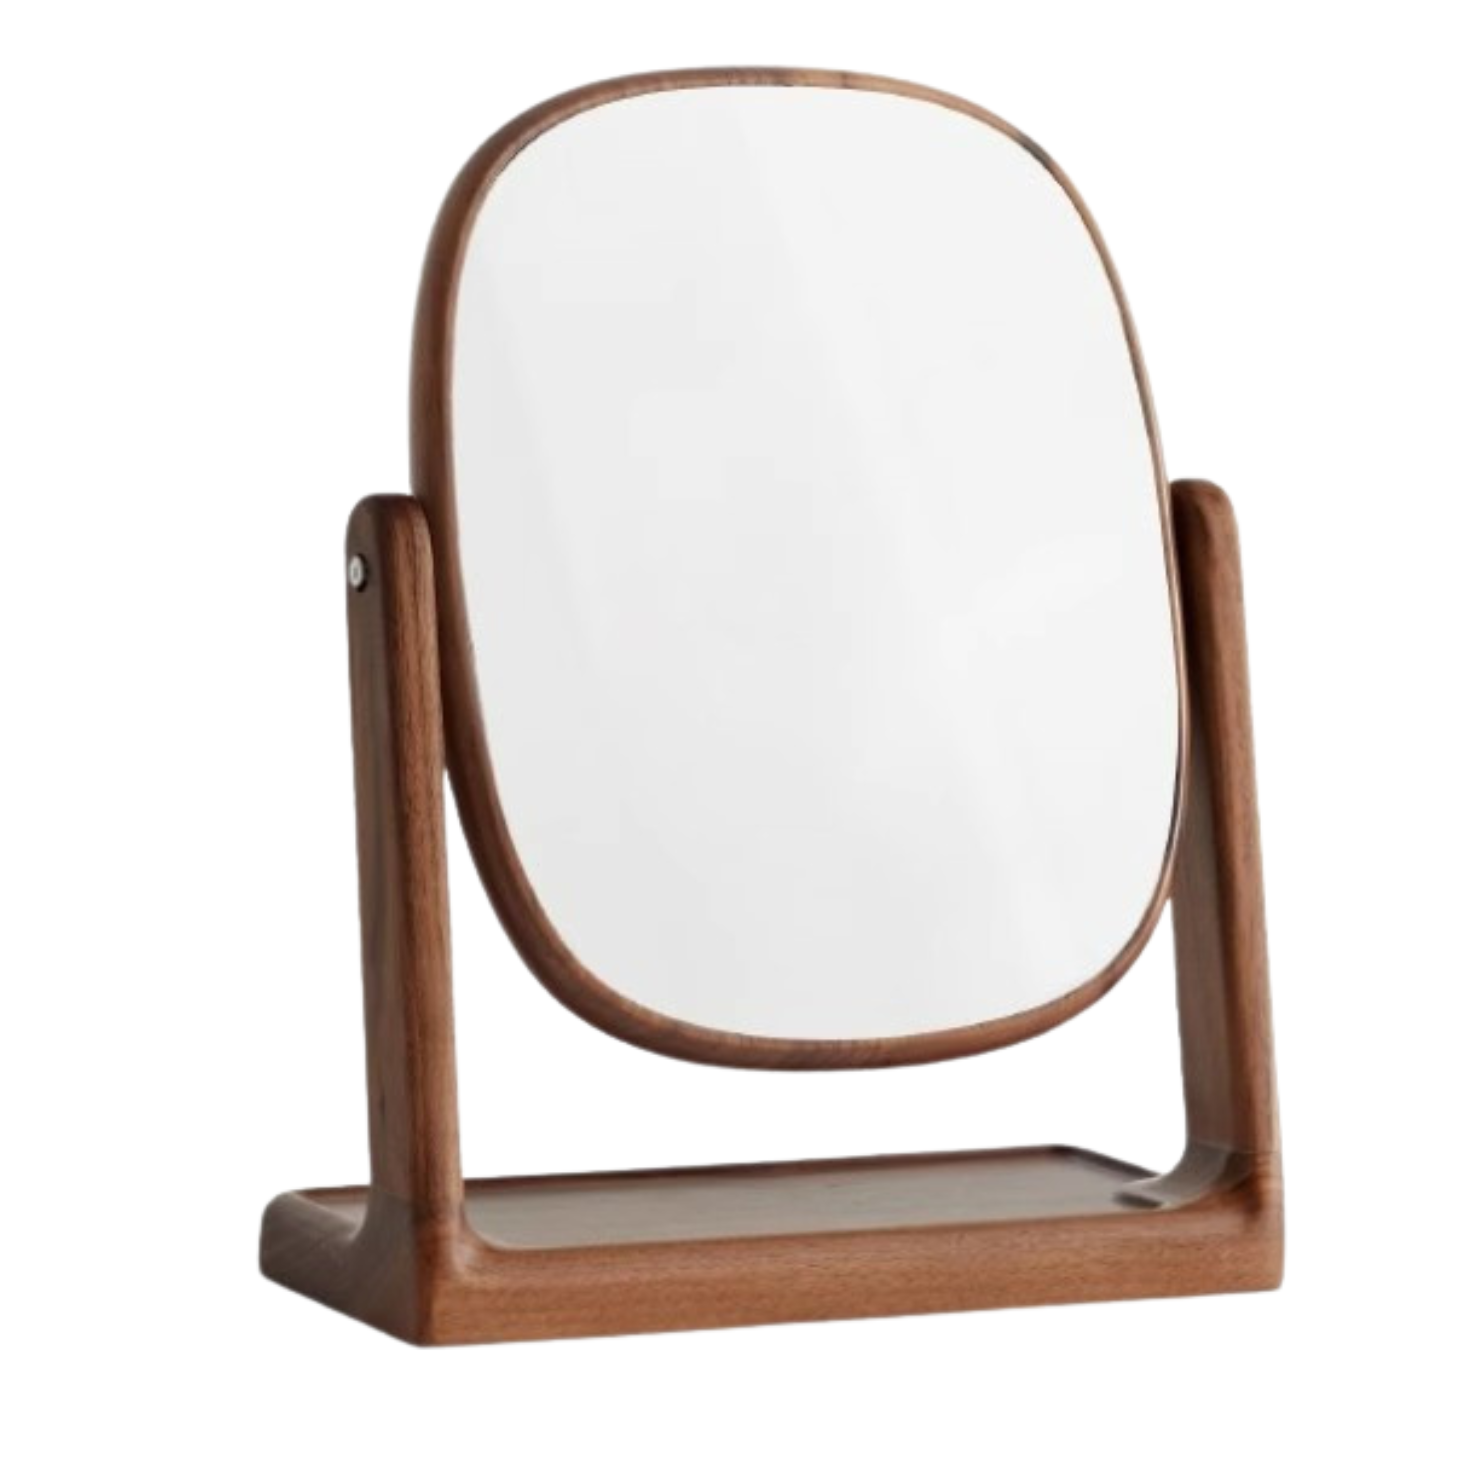 Solid wood makeup dressing mirror